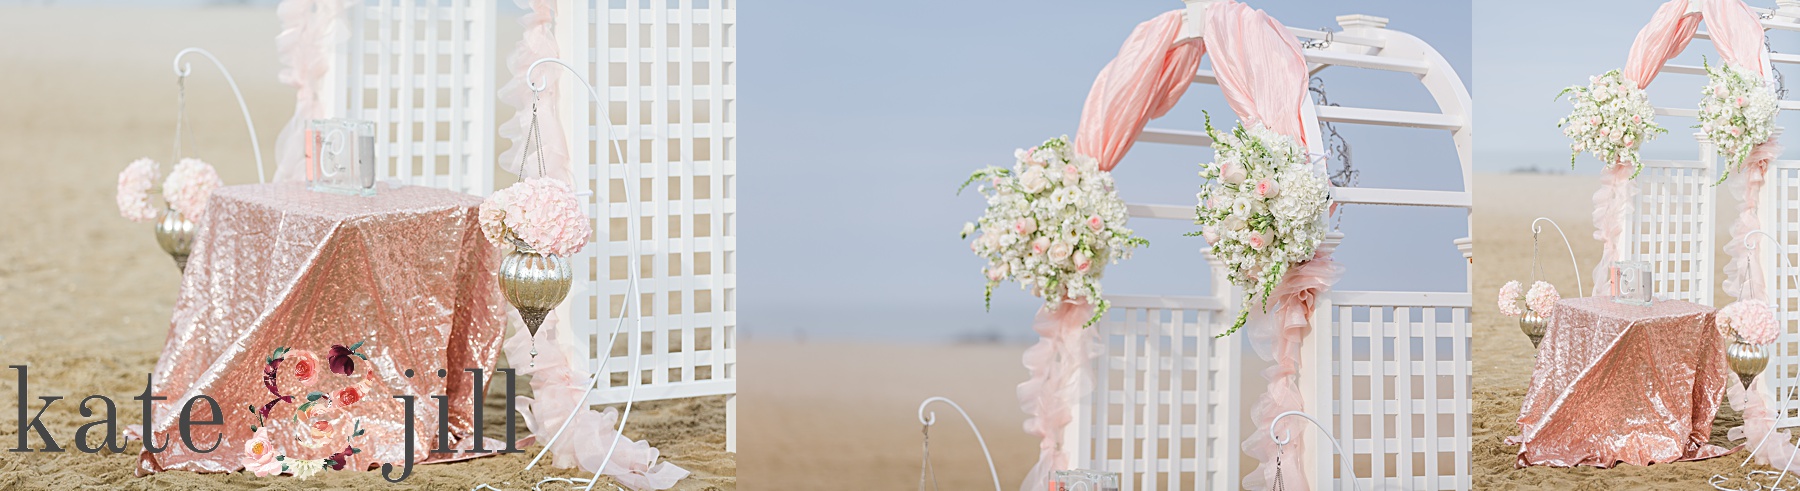 beach wedding ceremony decor mcloone's pier house long branch